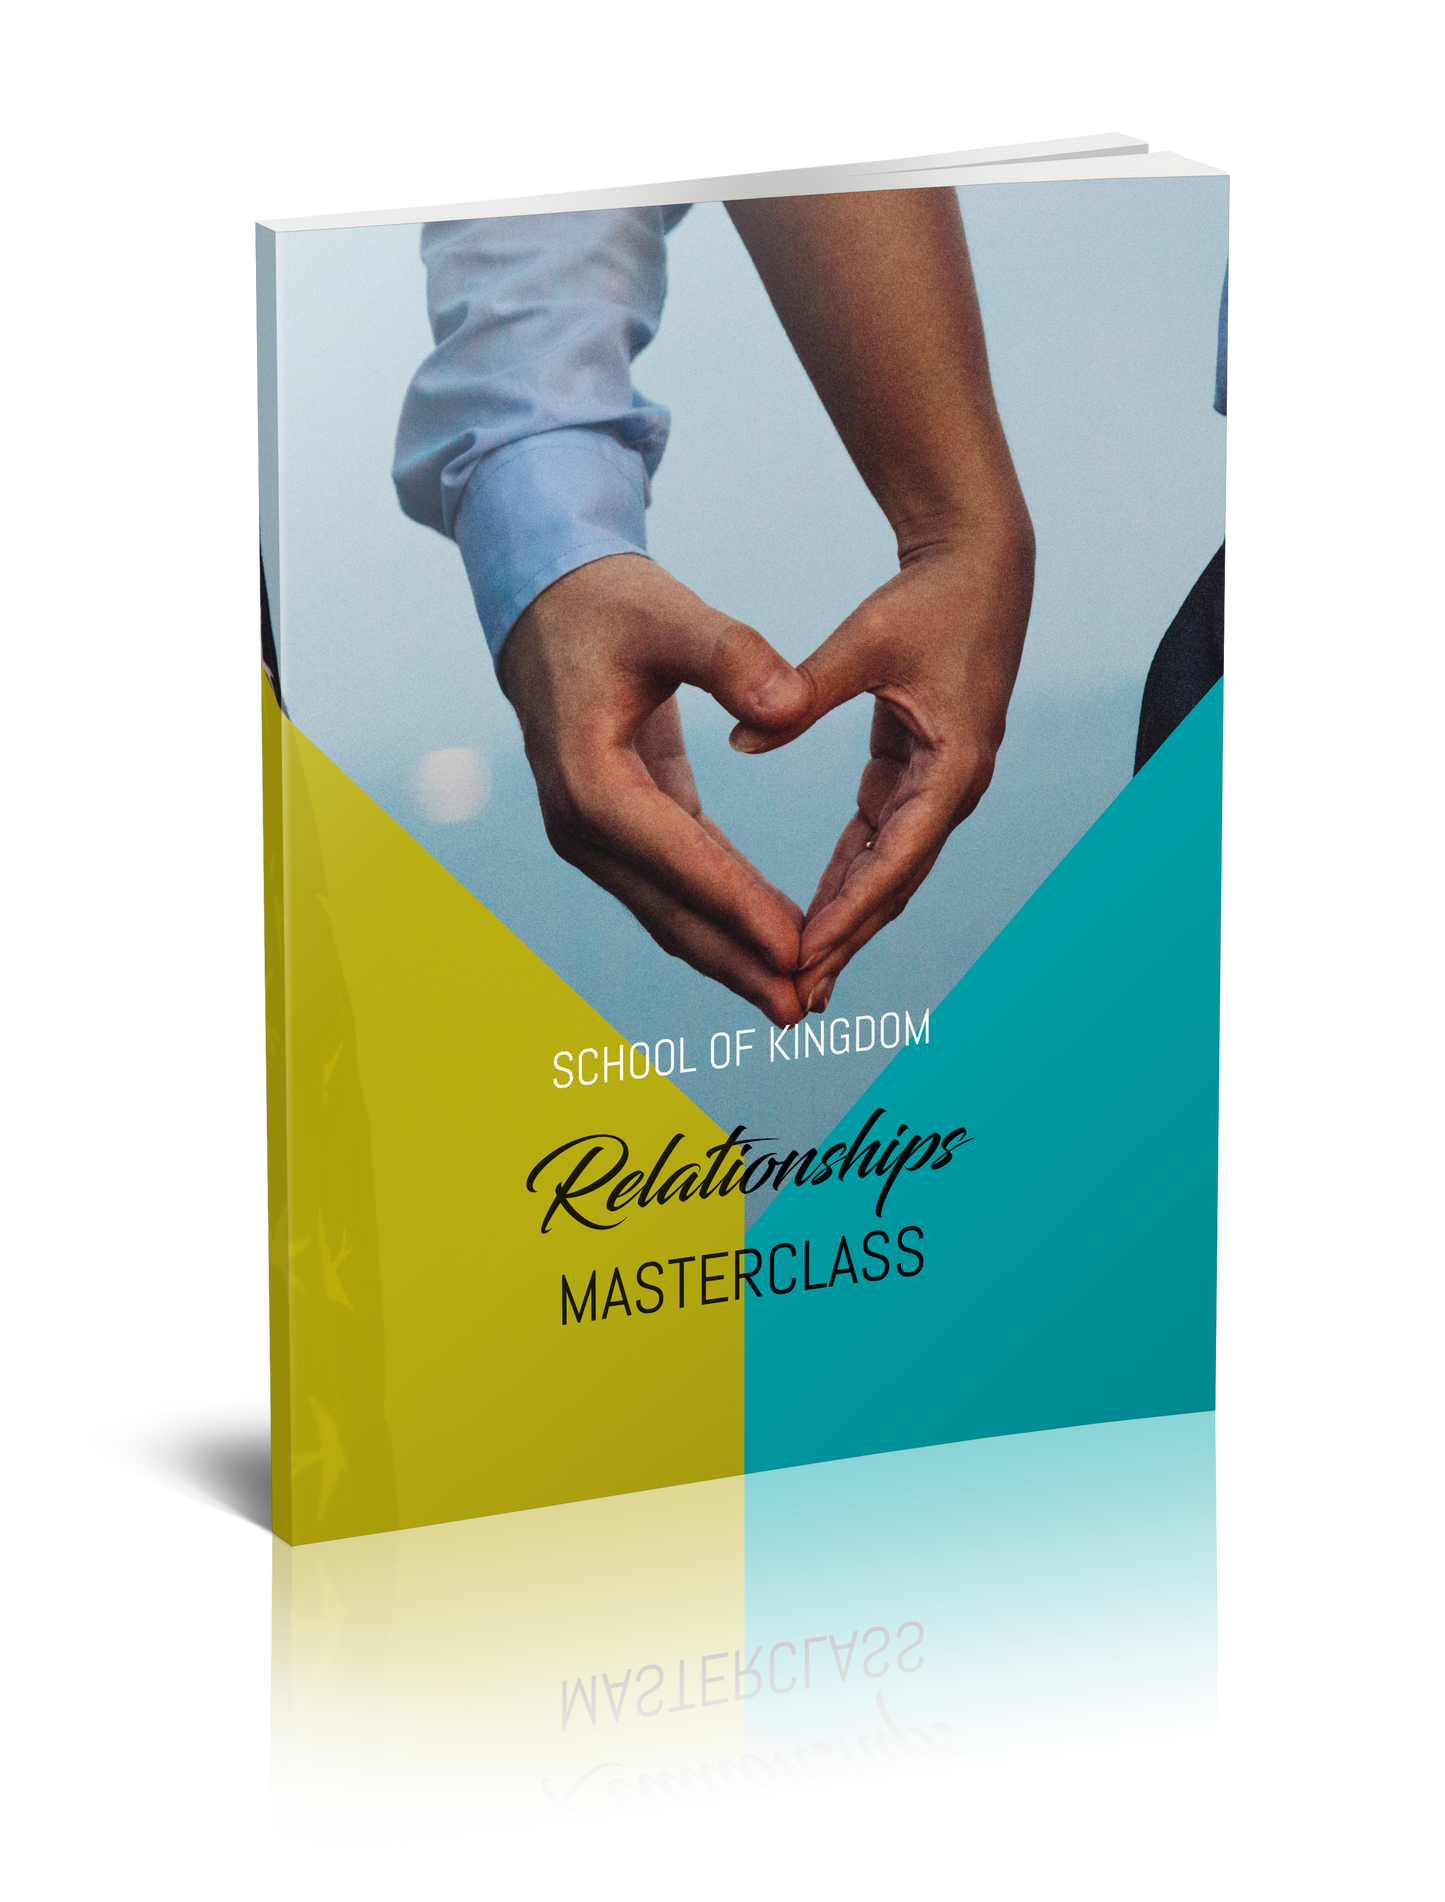 The School of Kingdom Relationships Masterclass Workbook